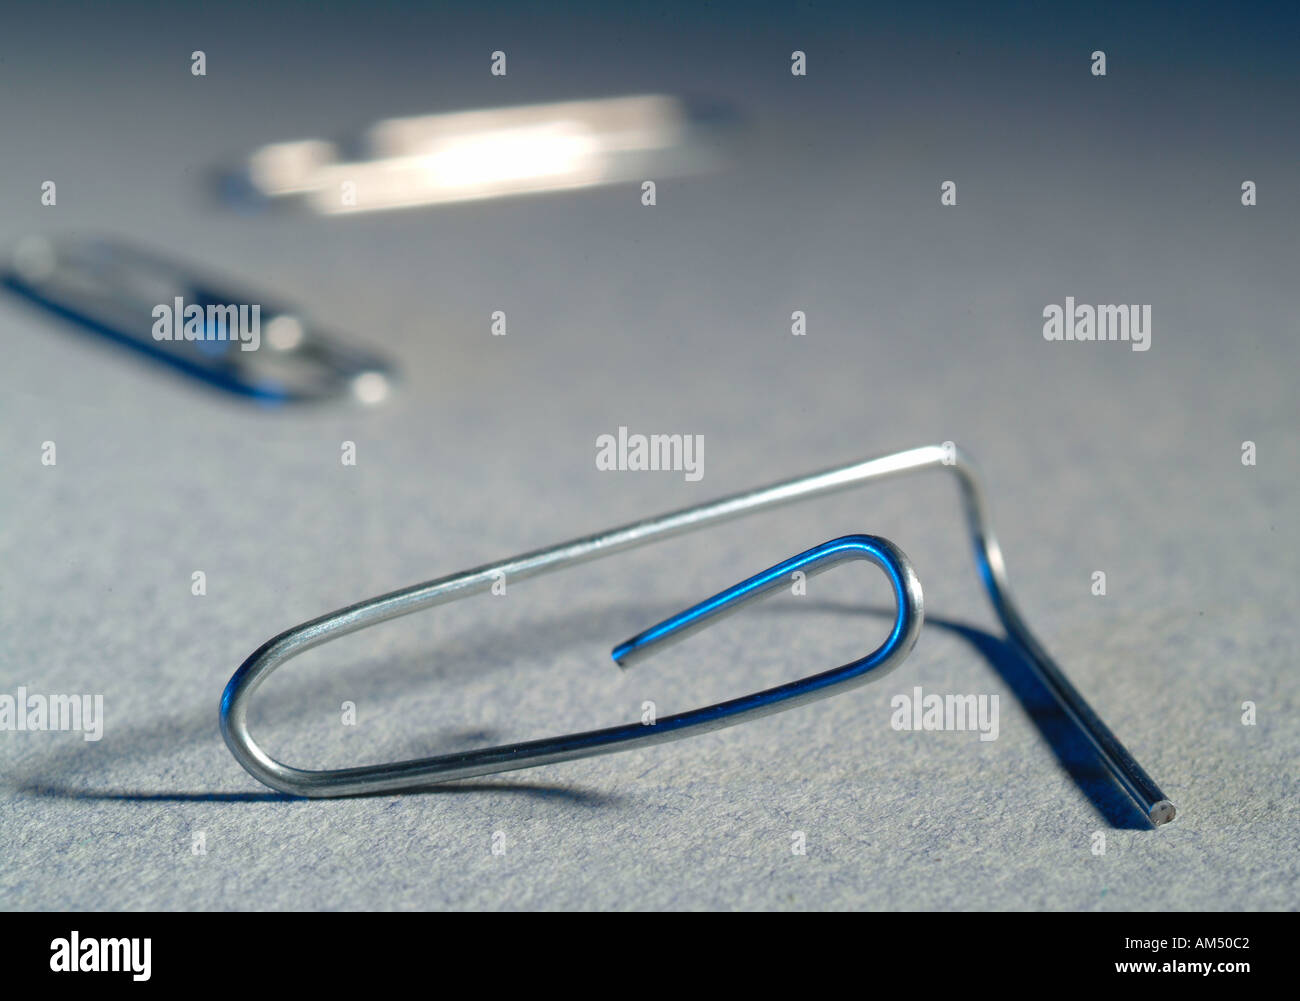 close up of a bent paper clip Stock Photo